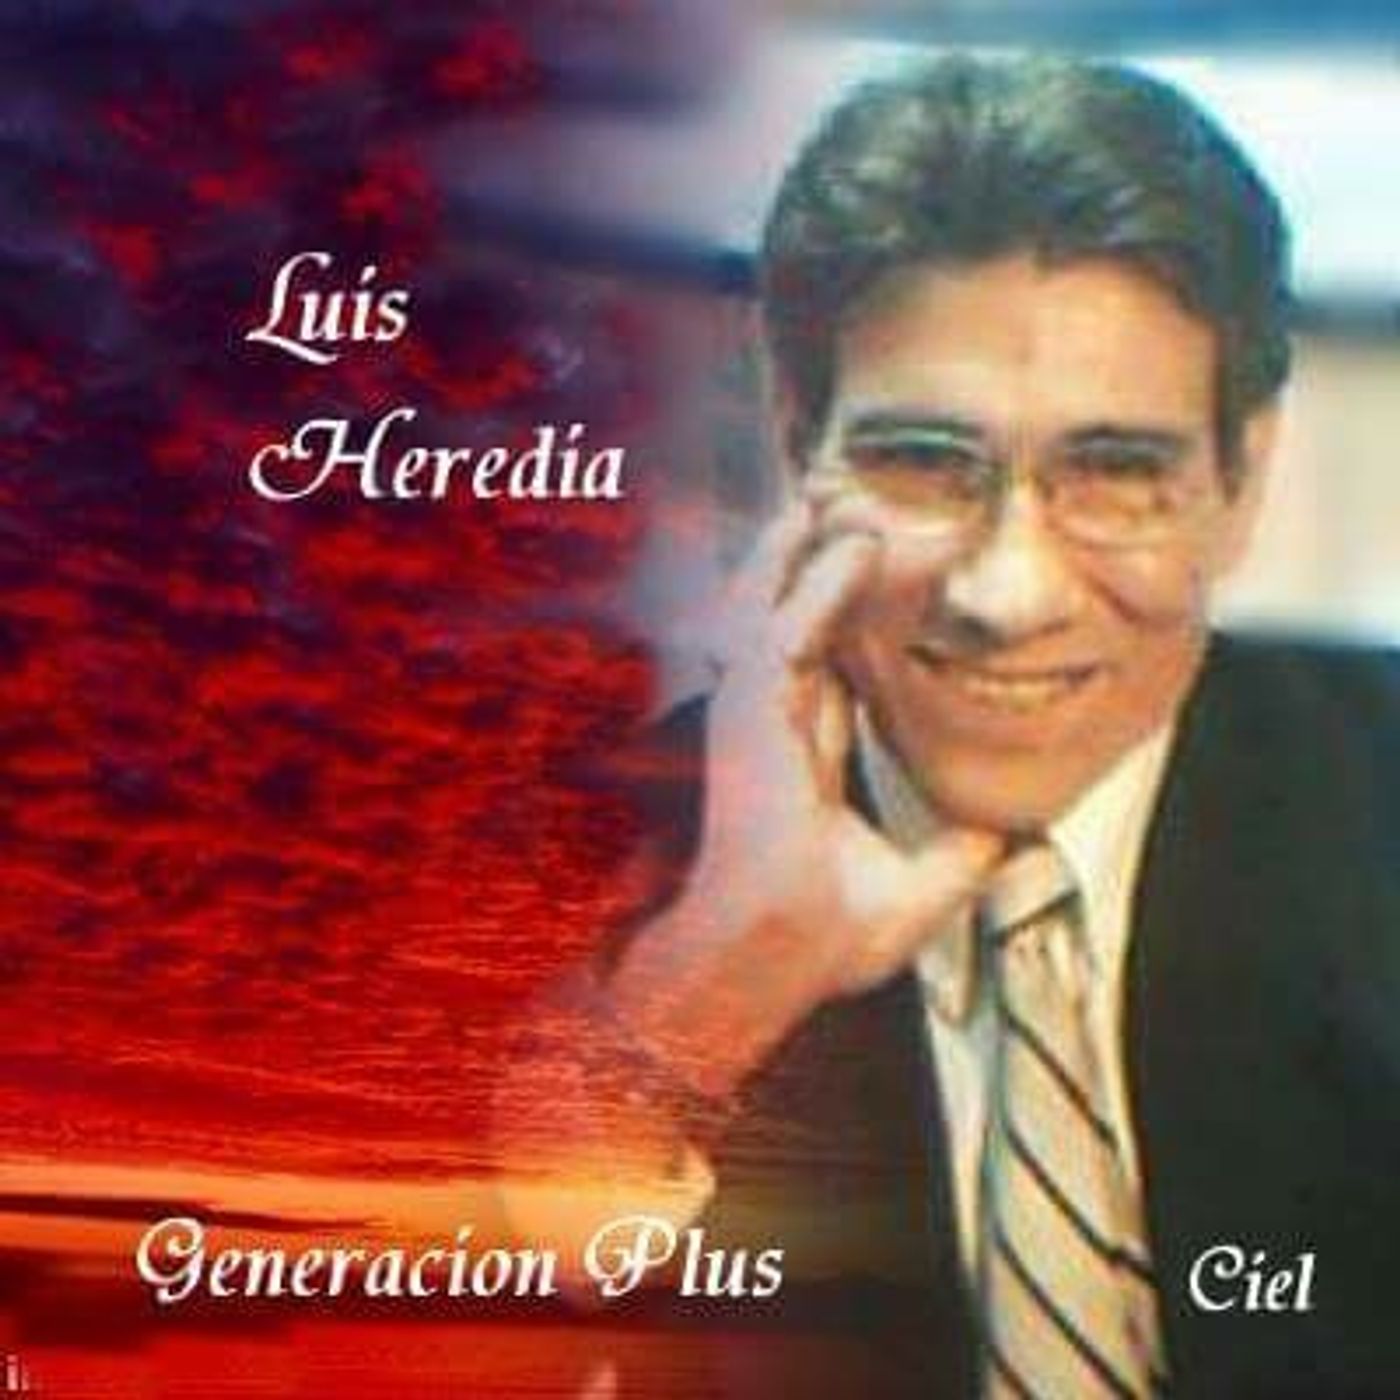 Luis Heredia's show